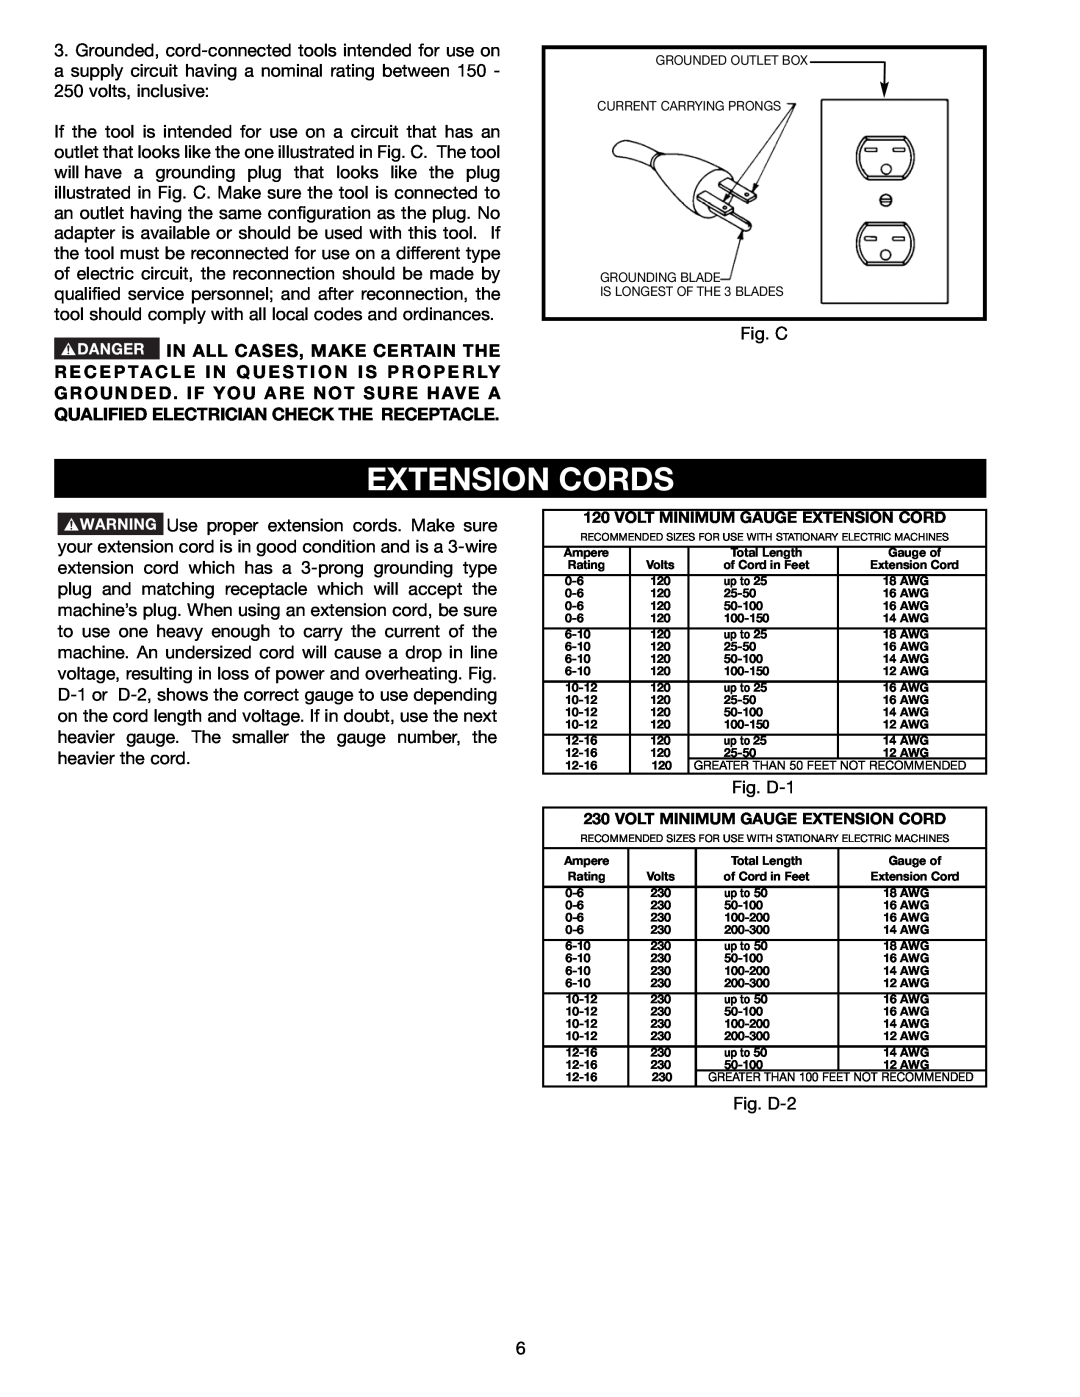 Delta 36-465 instruction manual Extension Cords 